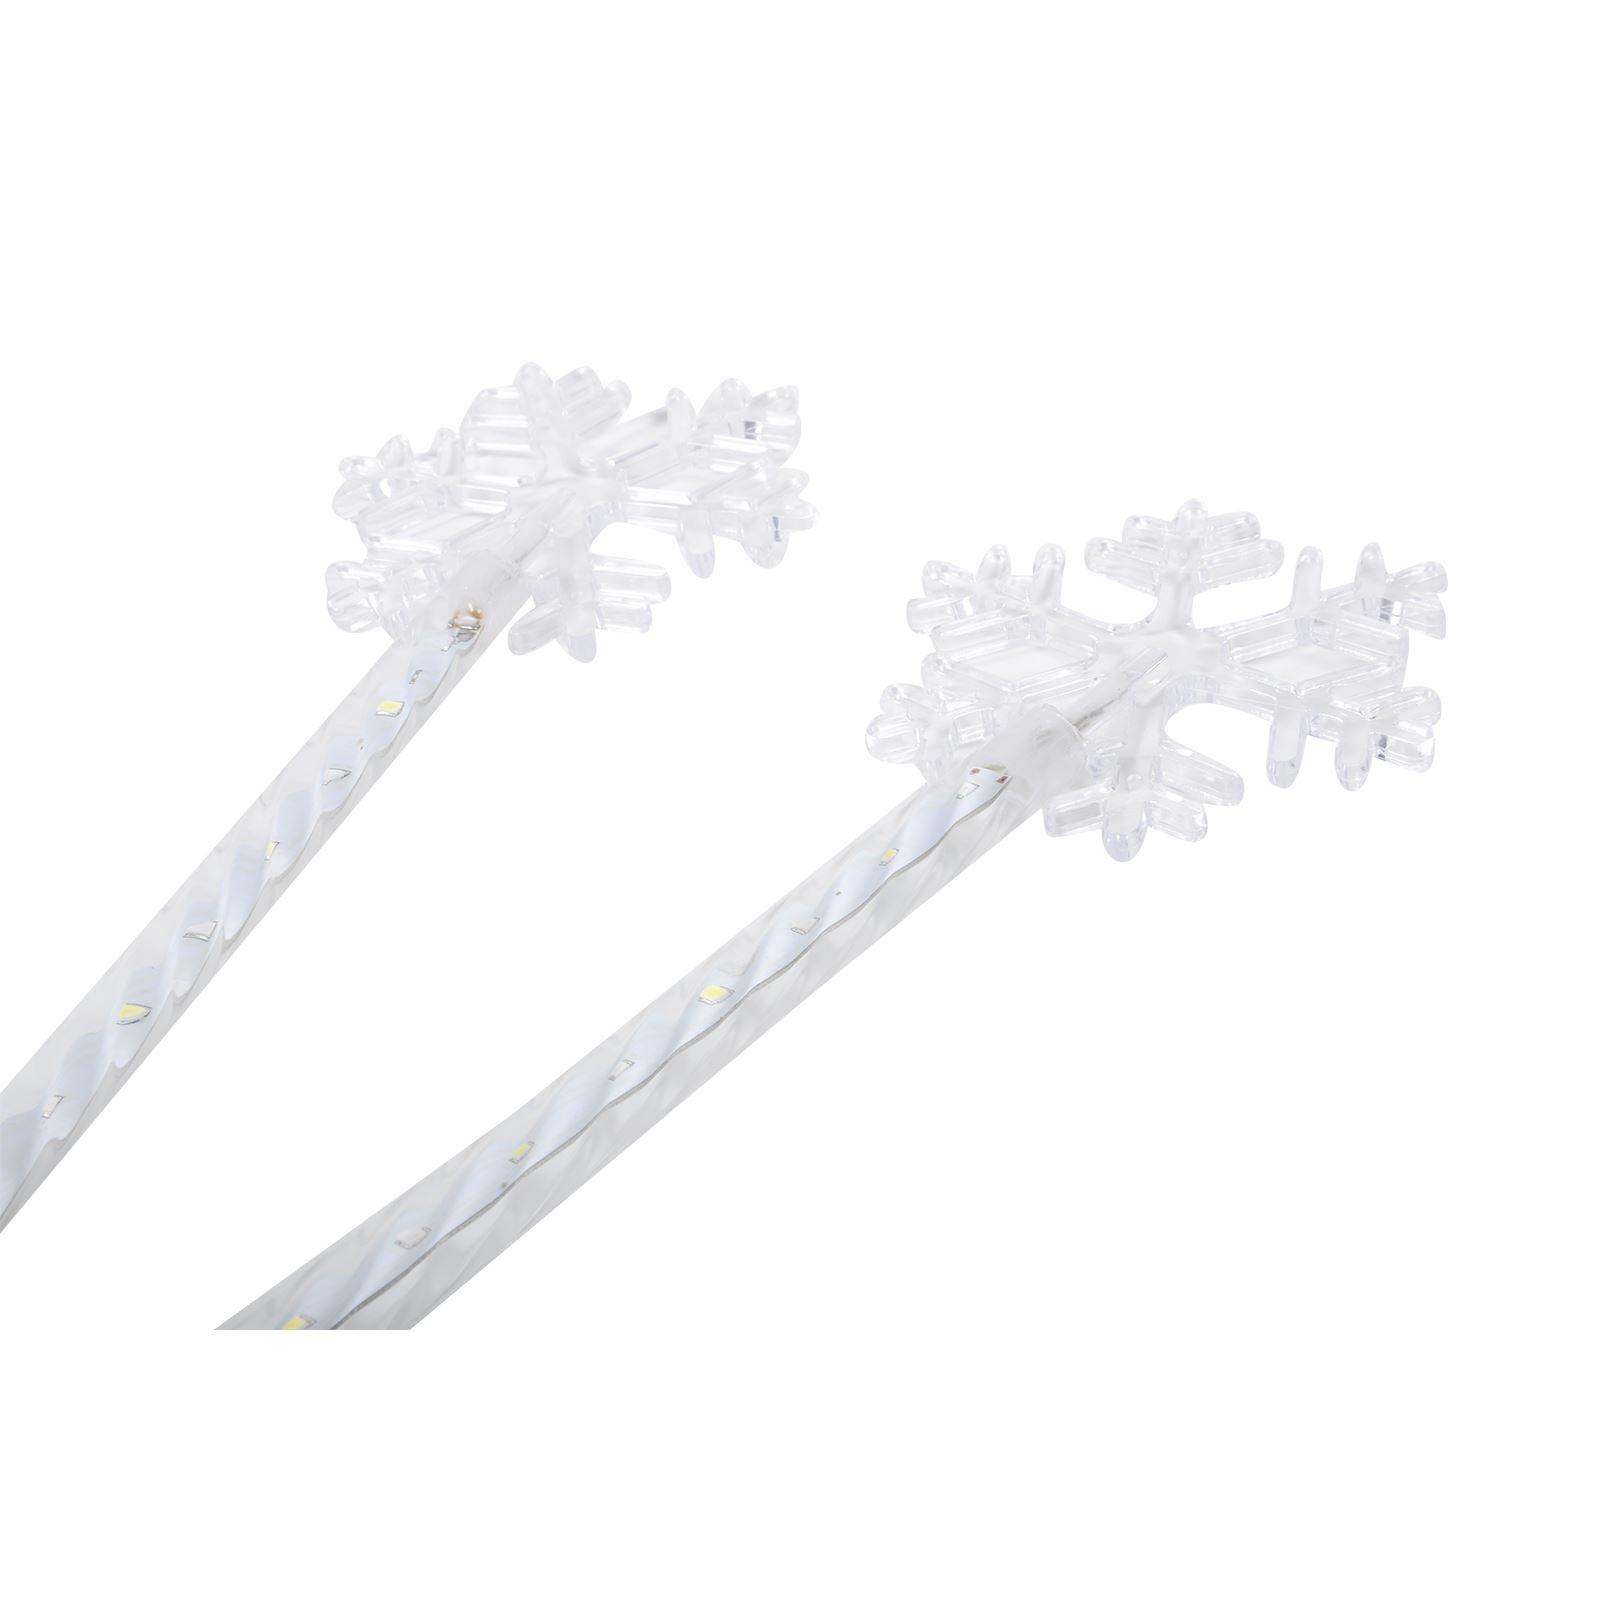 Mr Crimbo Set of 4 LED Snowflake Pathway Christmas Lights - MrCrimbo.co.uk -XS5096 - -christmas garden lights